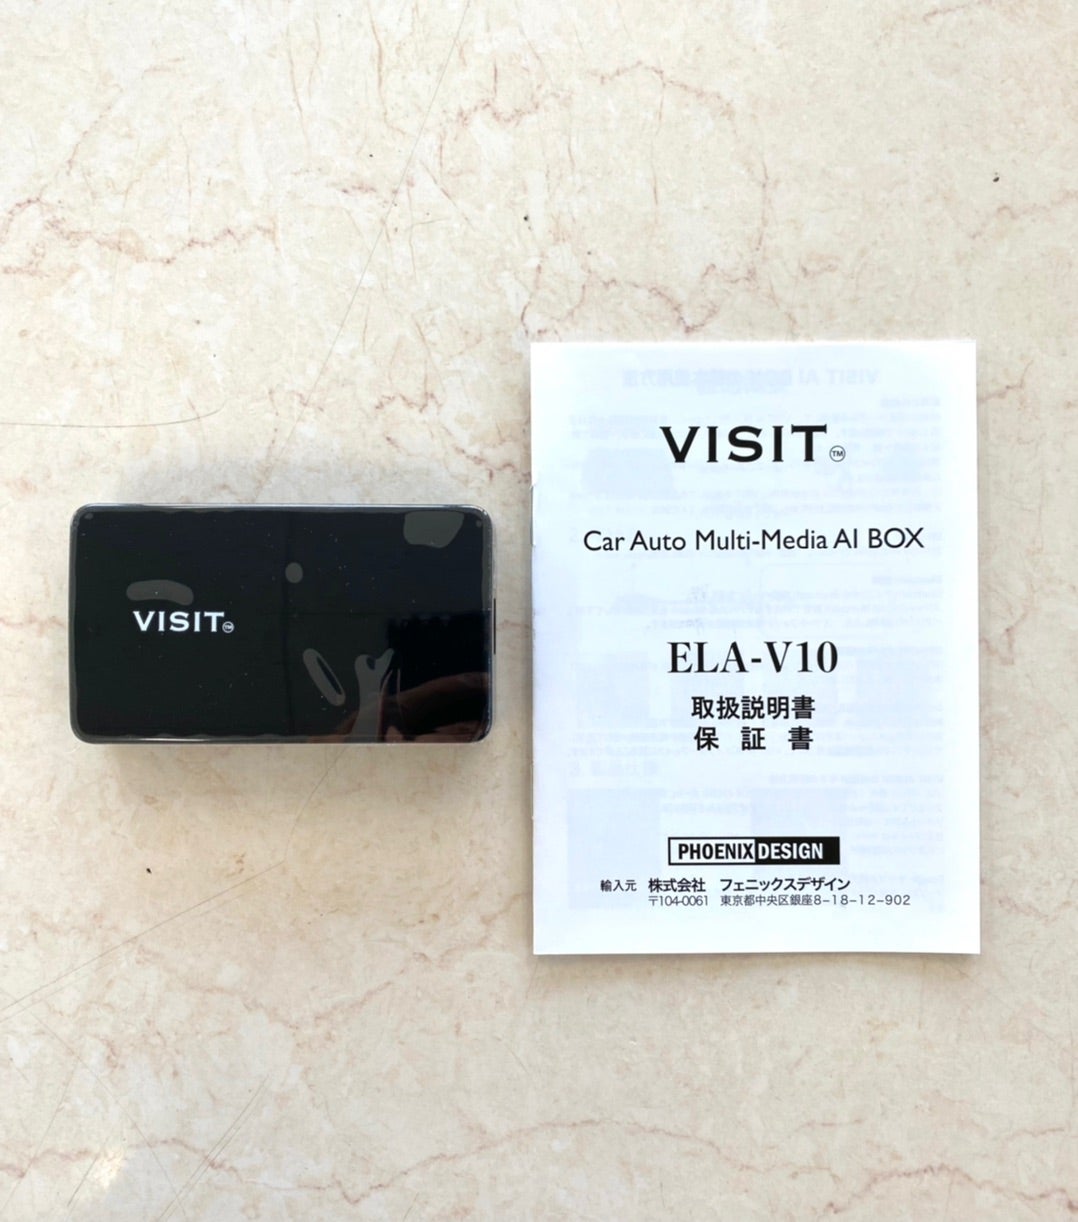 VISIT ELA-V10 CarAuto Multi-Media AIBOX 【完売】 51.0%OFF www